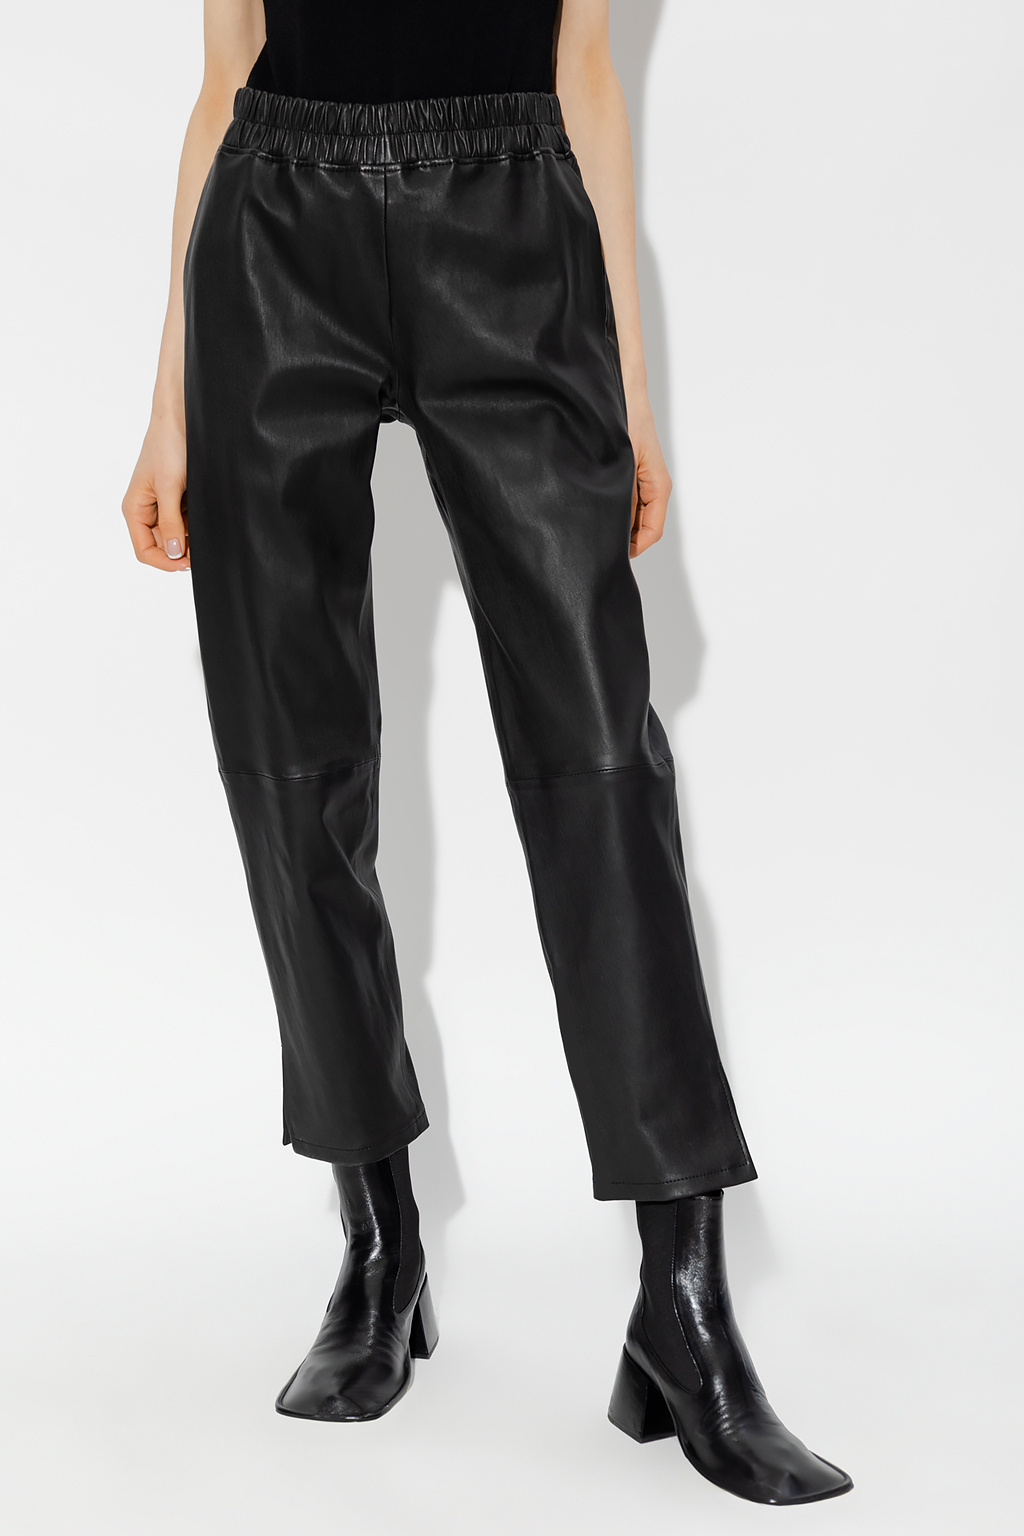 Calvin Klein 205W39nyc long straight-leg jeans ‘Jardin’ trousers